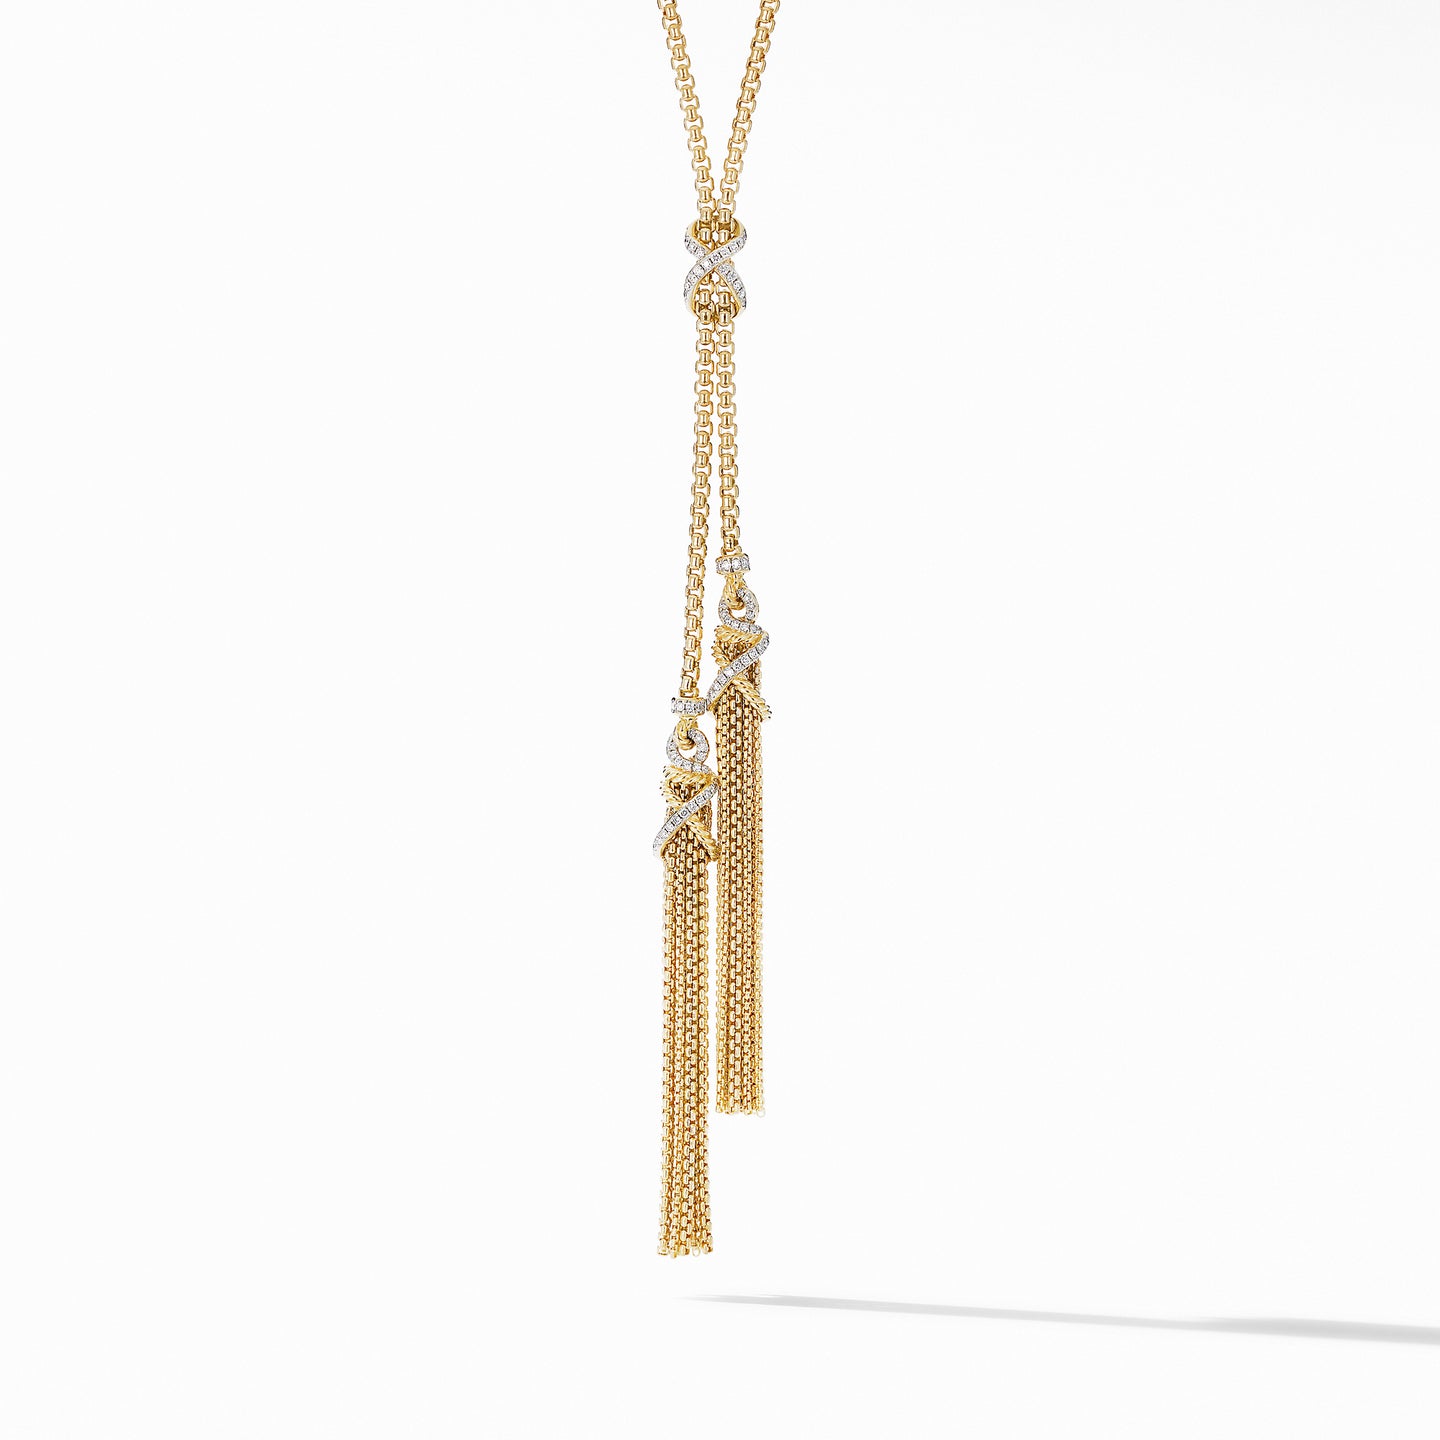 David Yurman Helena Tassel Necklace in 18K Yellow Gold with Diamonds